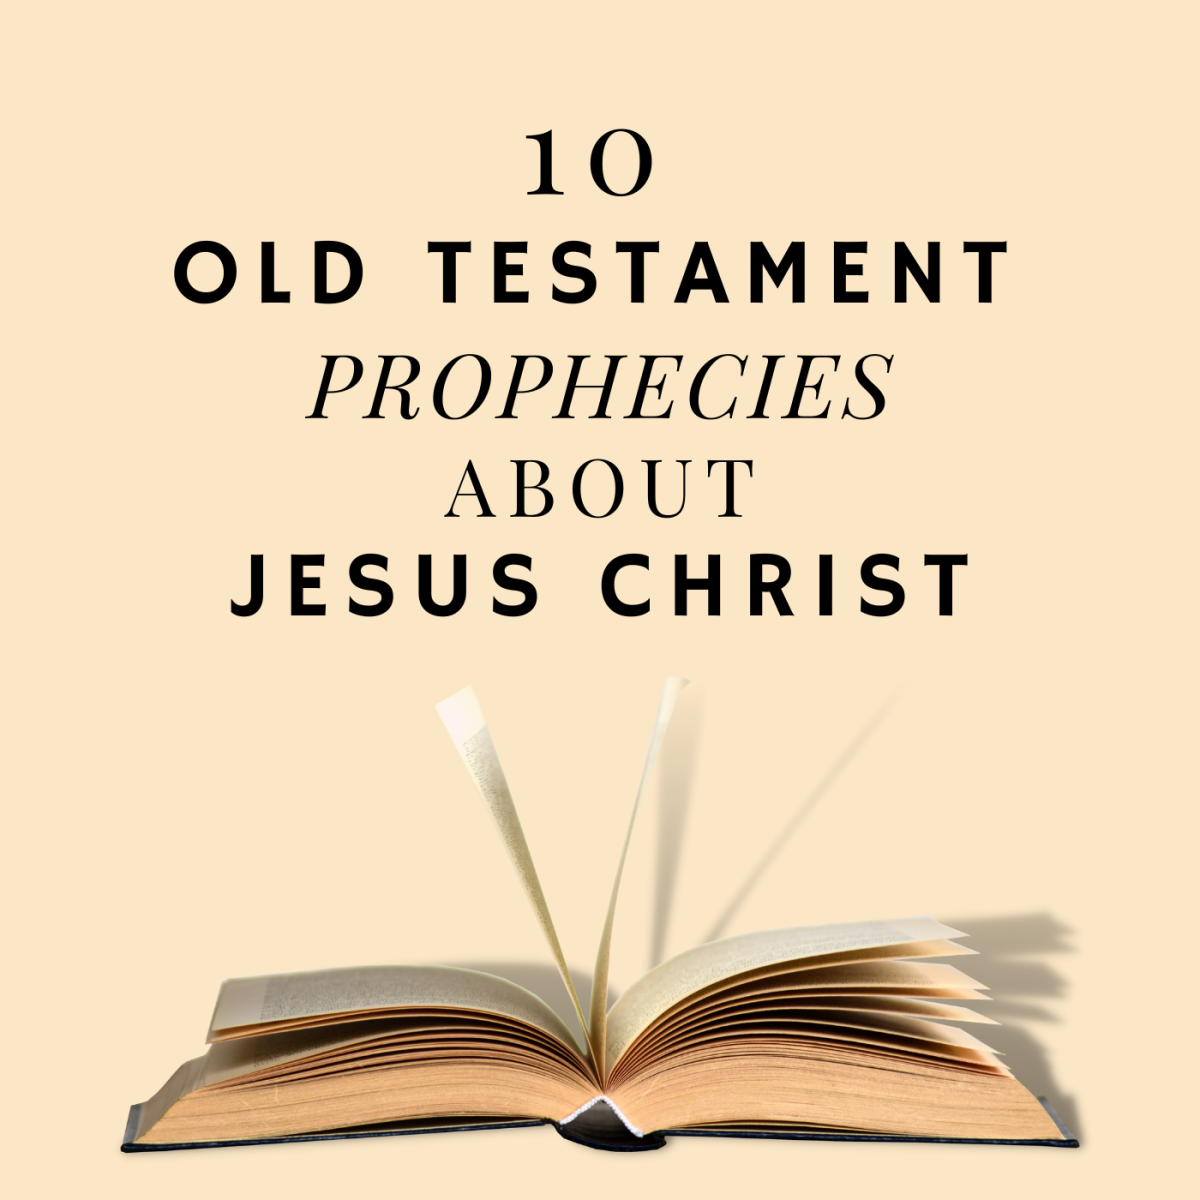 Ten amazing old testament prophecies about Jesus Christ